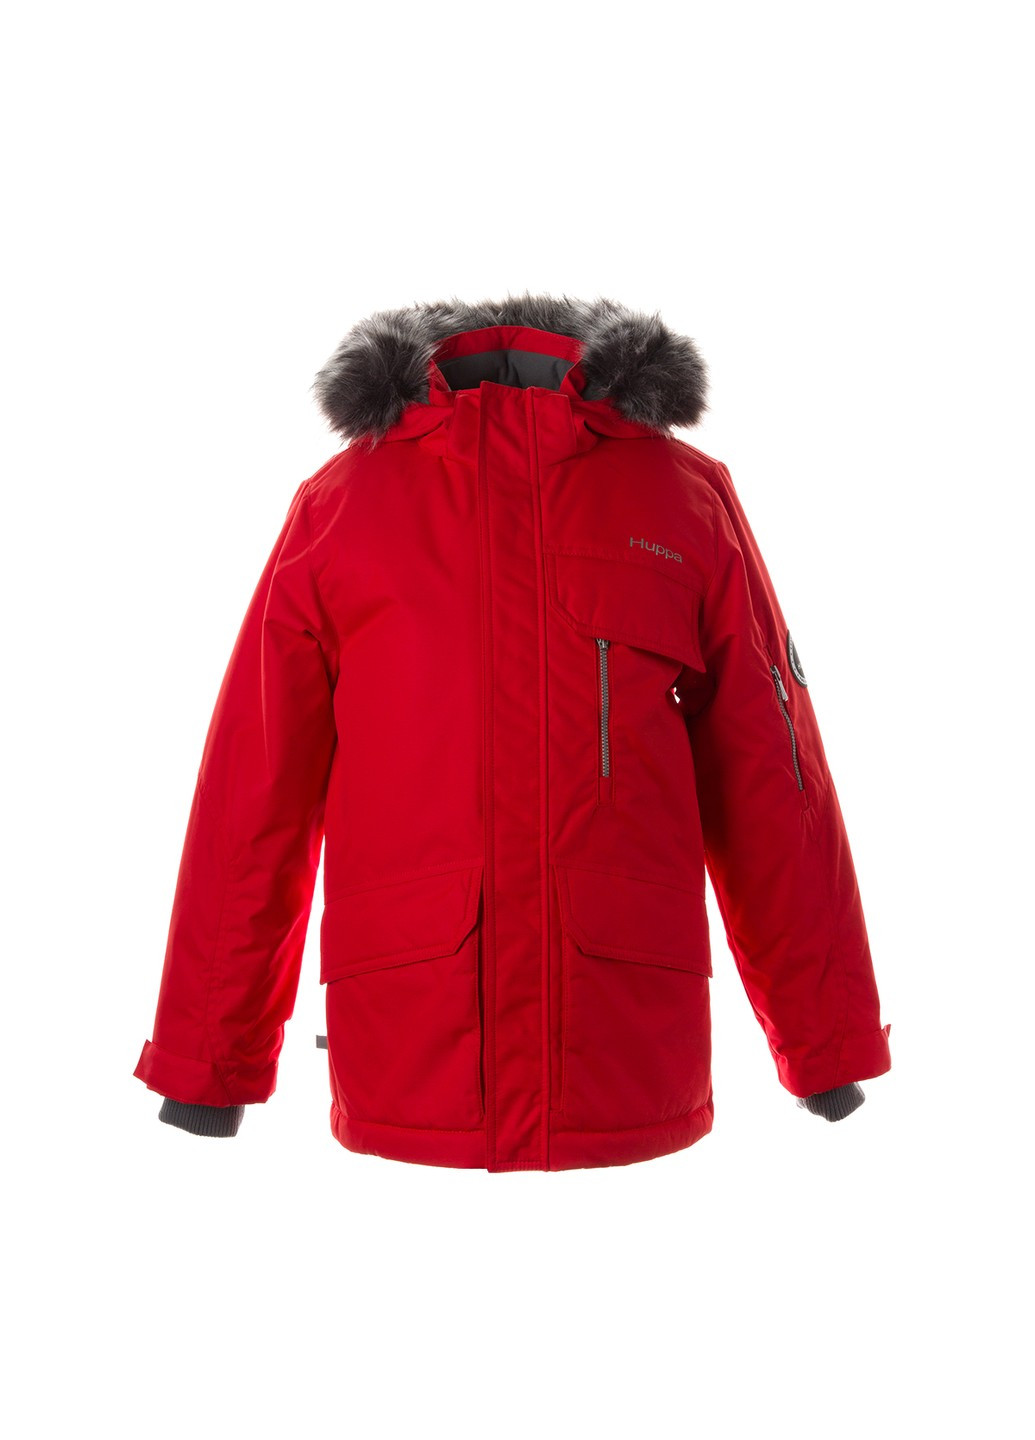 Красная зимняя куртка зимняя marten 2 Huppa